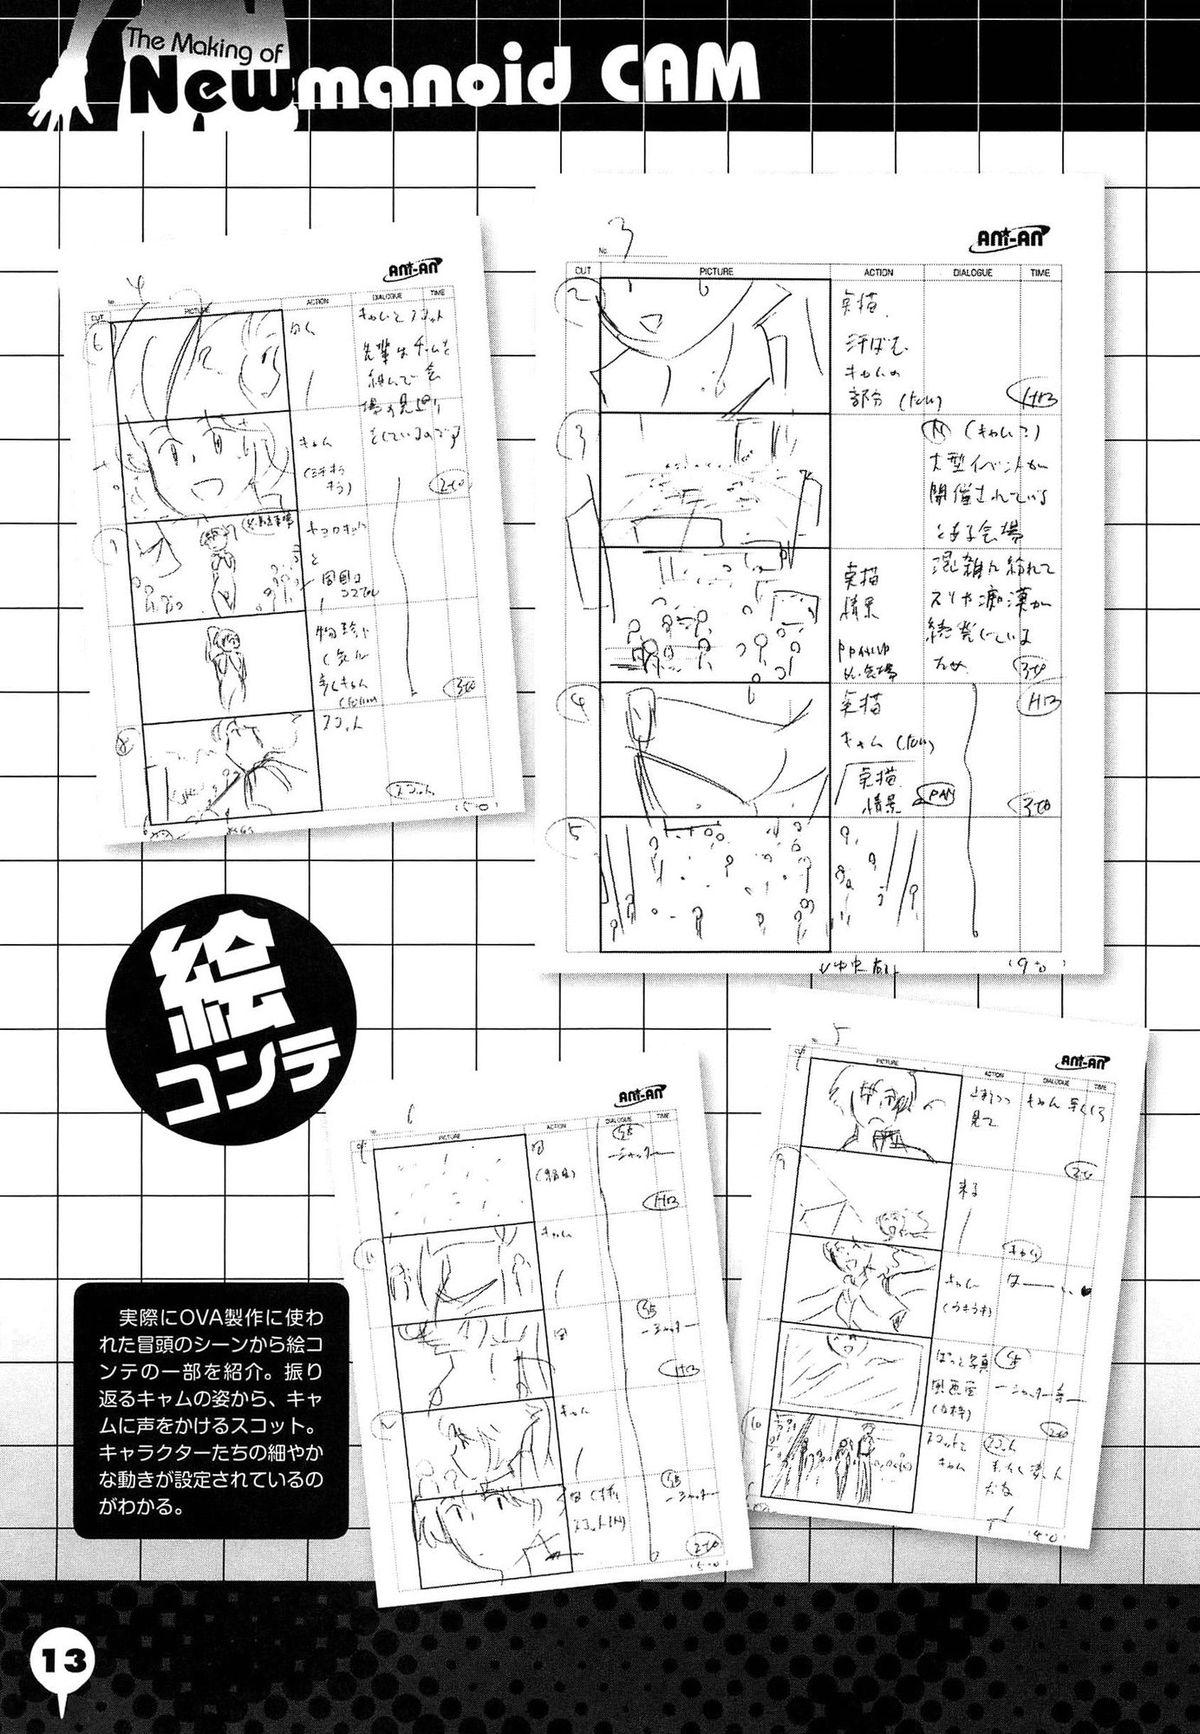 Newmanoid CAM Vol. 2 Shokai Genteiban 248